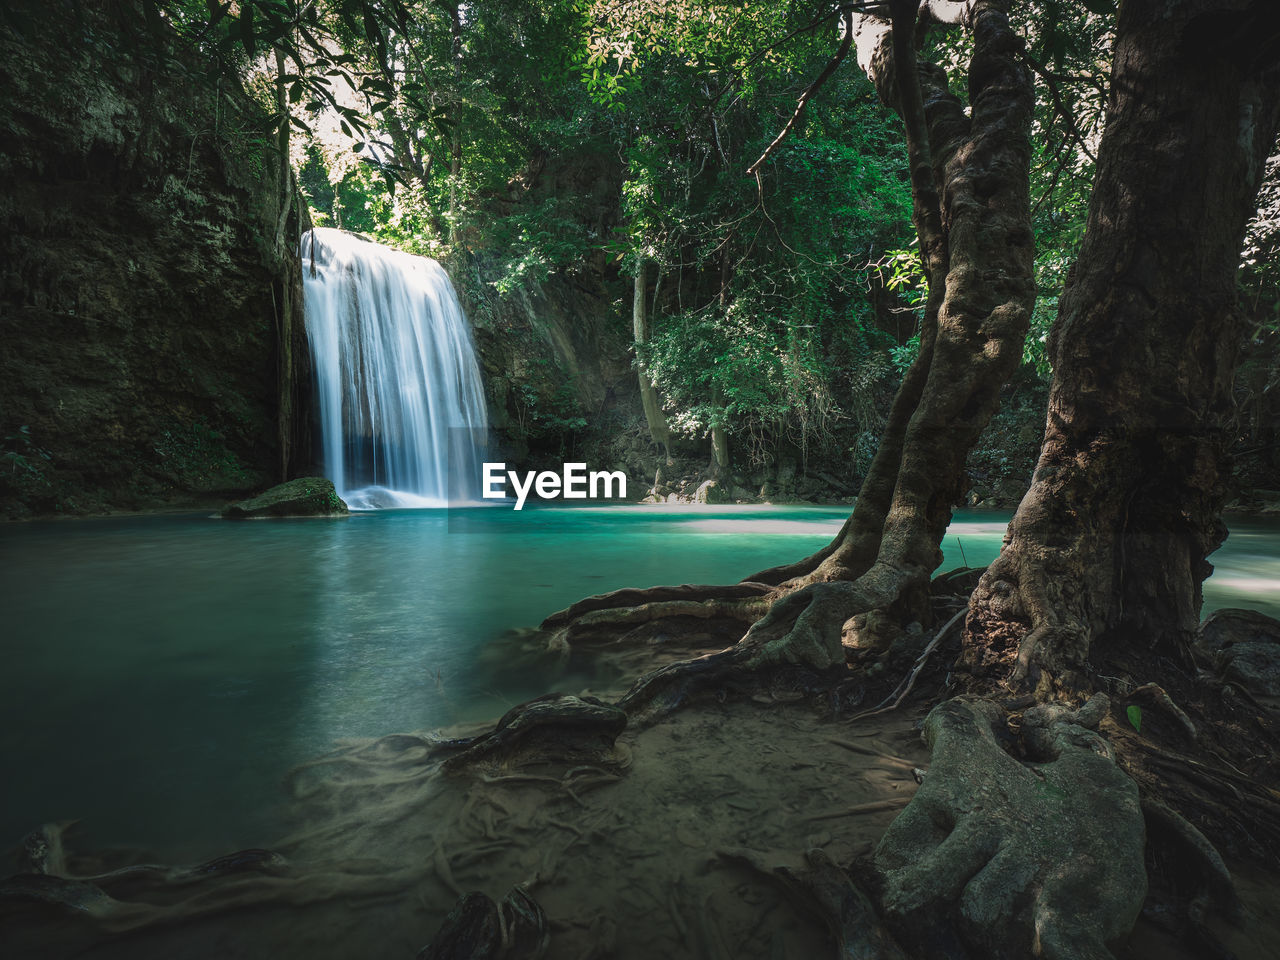 Epic waterfall smooth stream with emerald pond in rainforest. erawan falls, kanchanaburi, thailand.